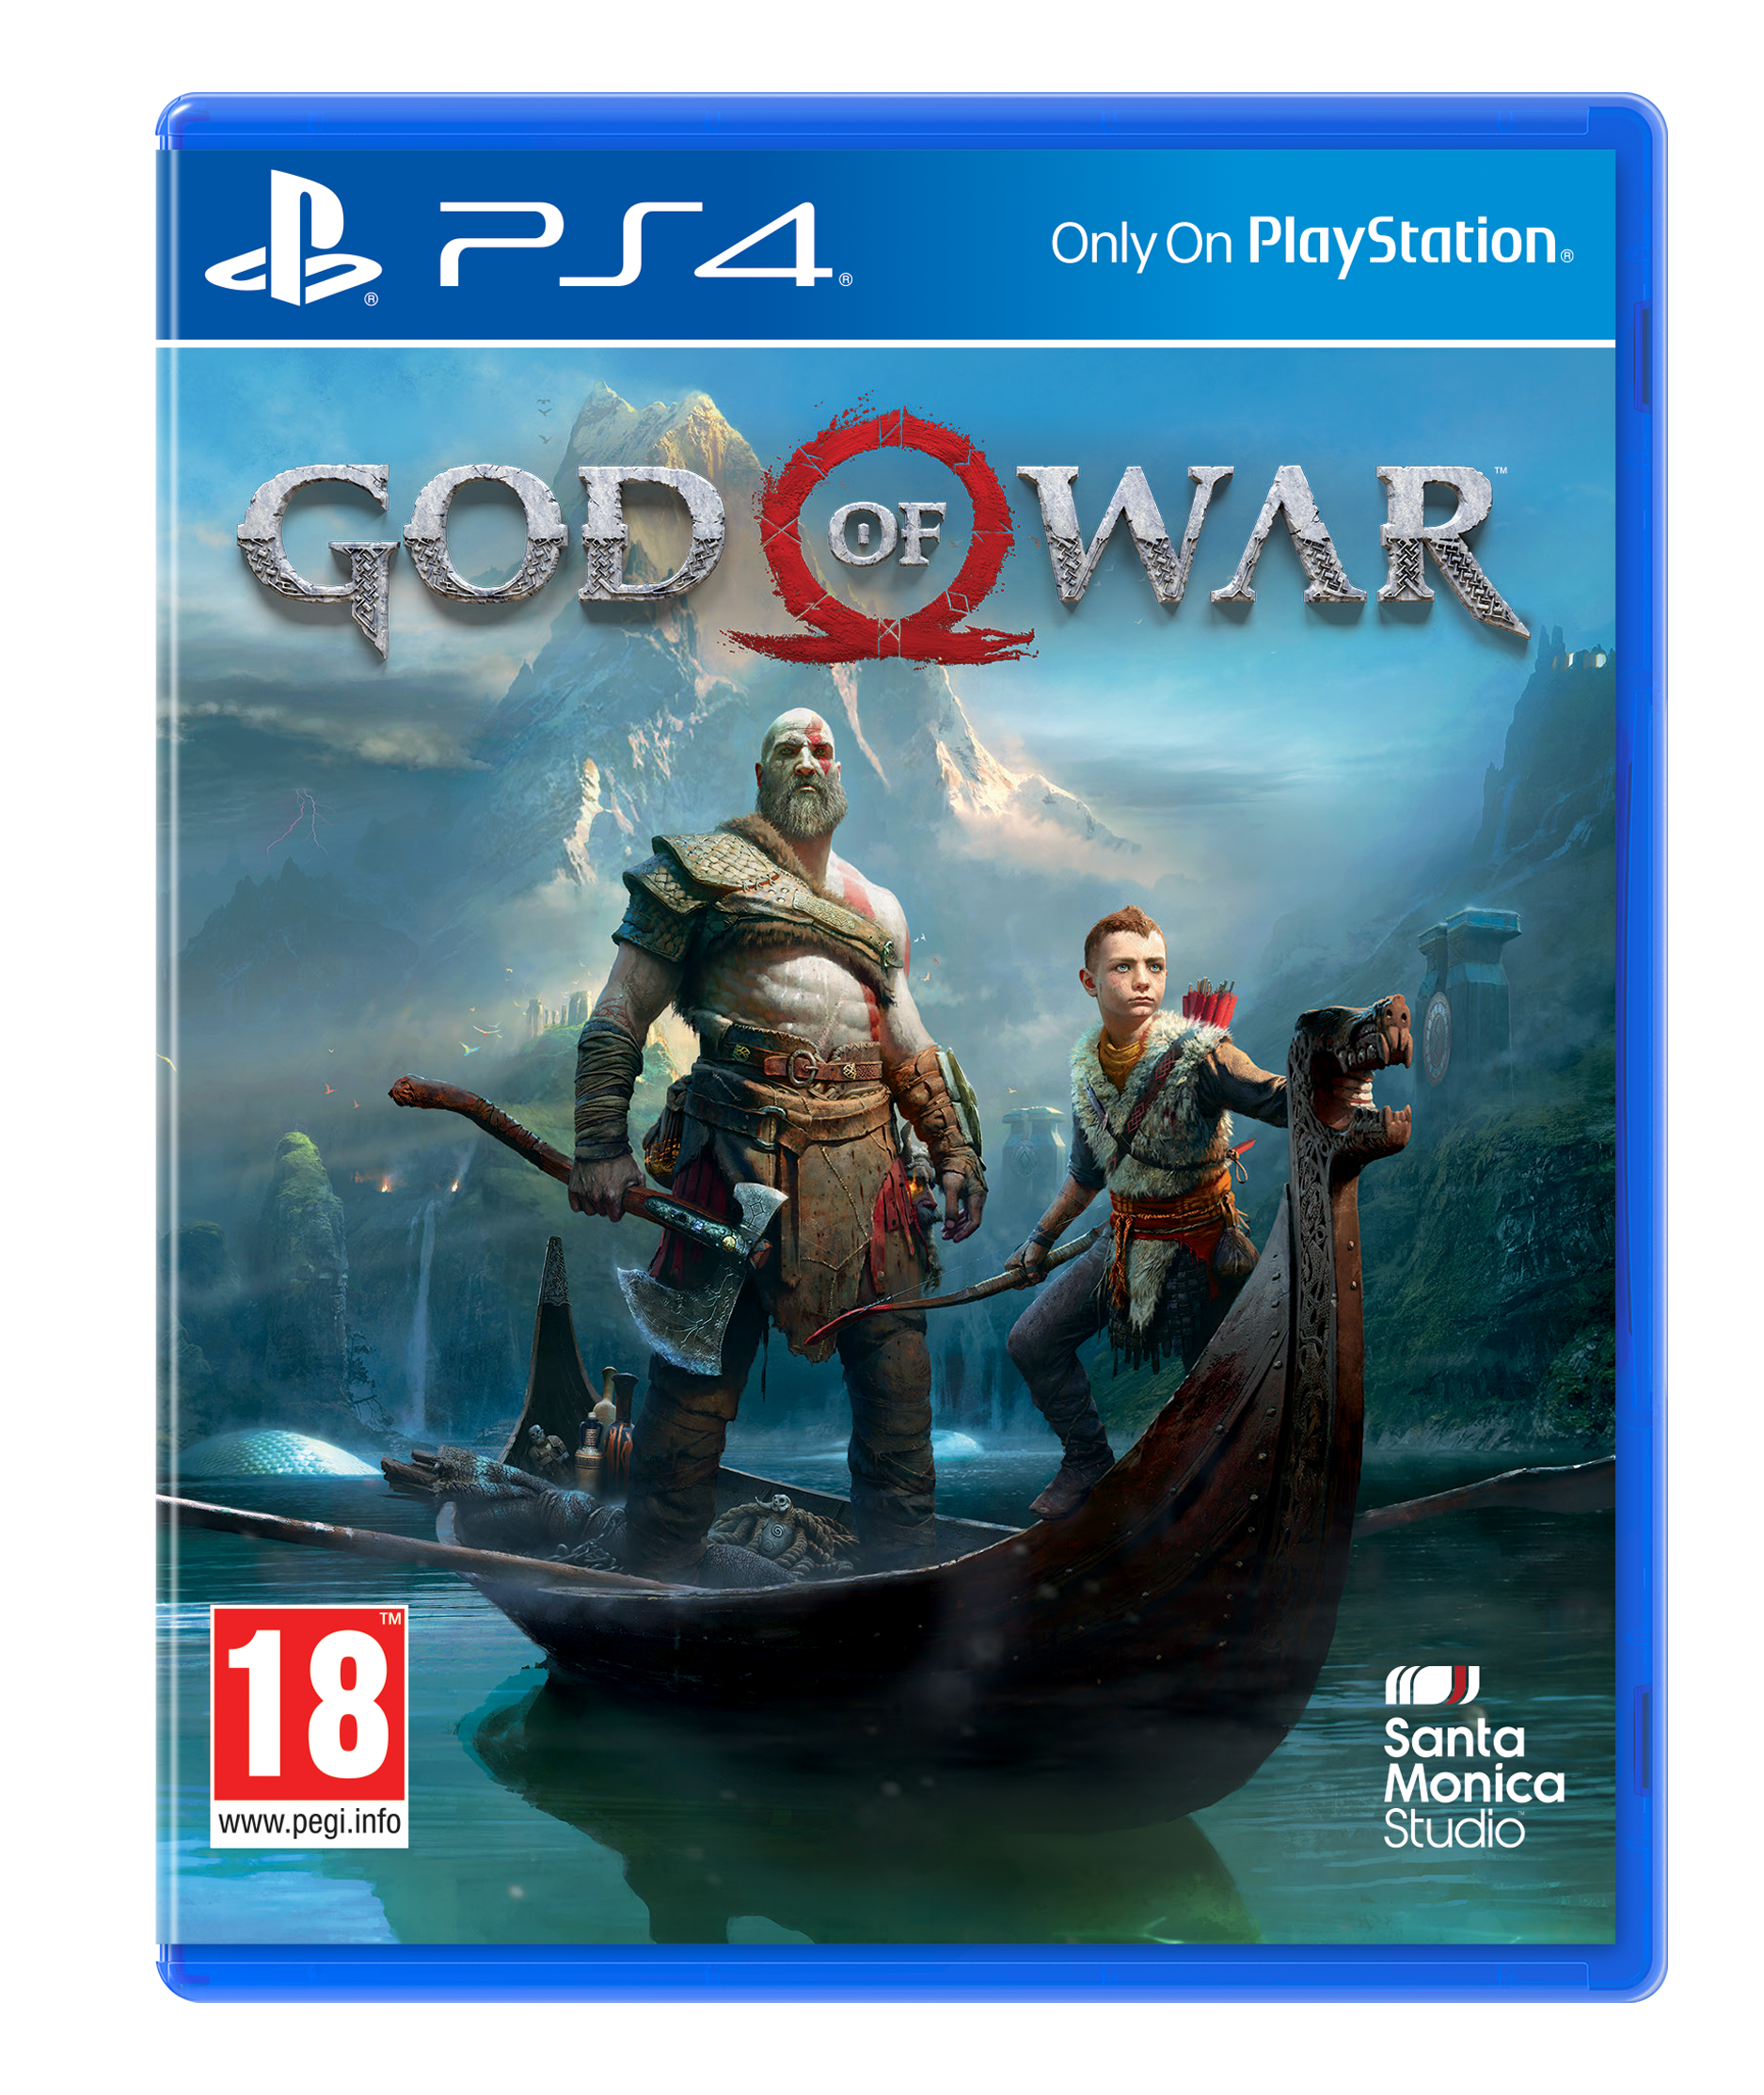 God of War Standard Edition